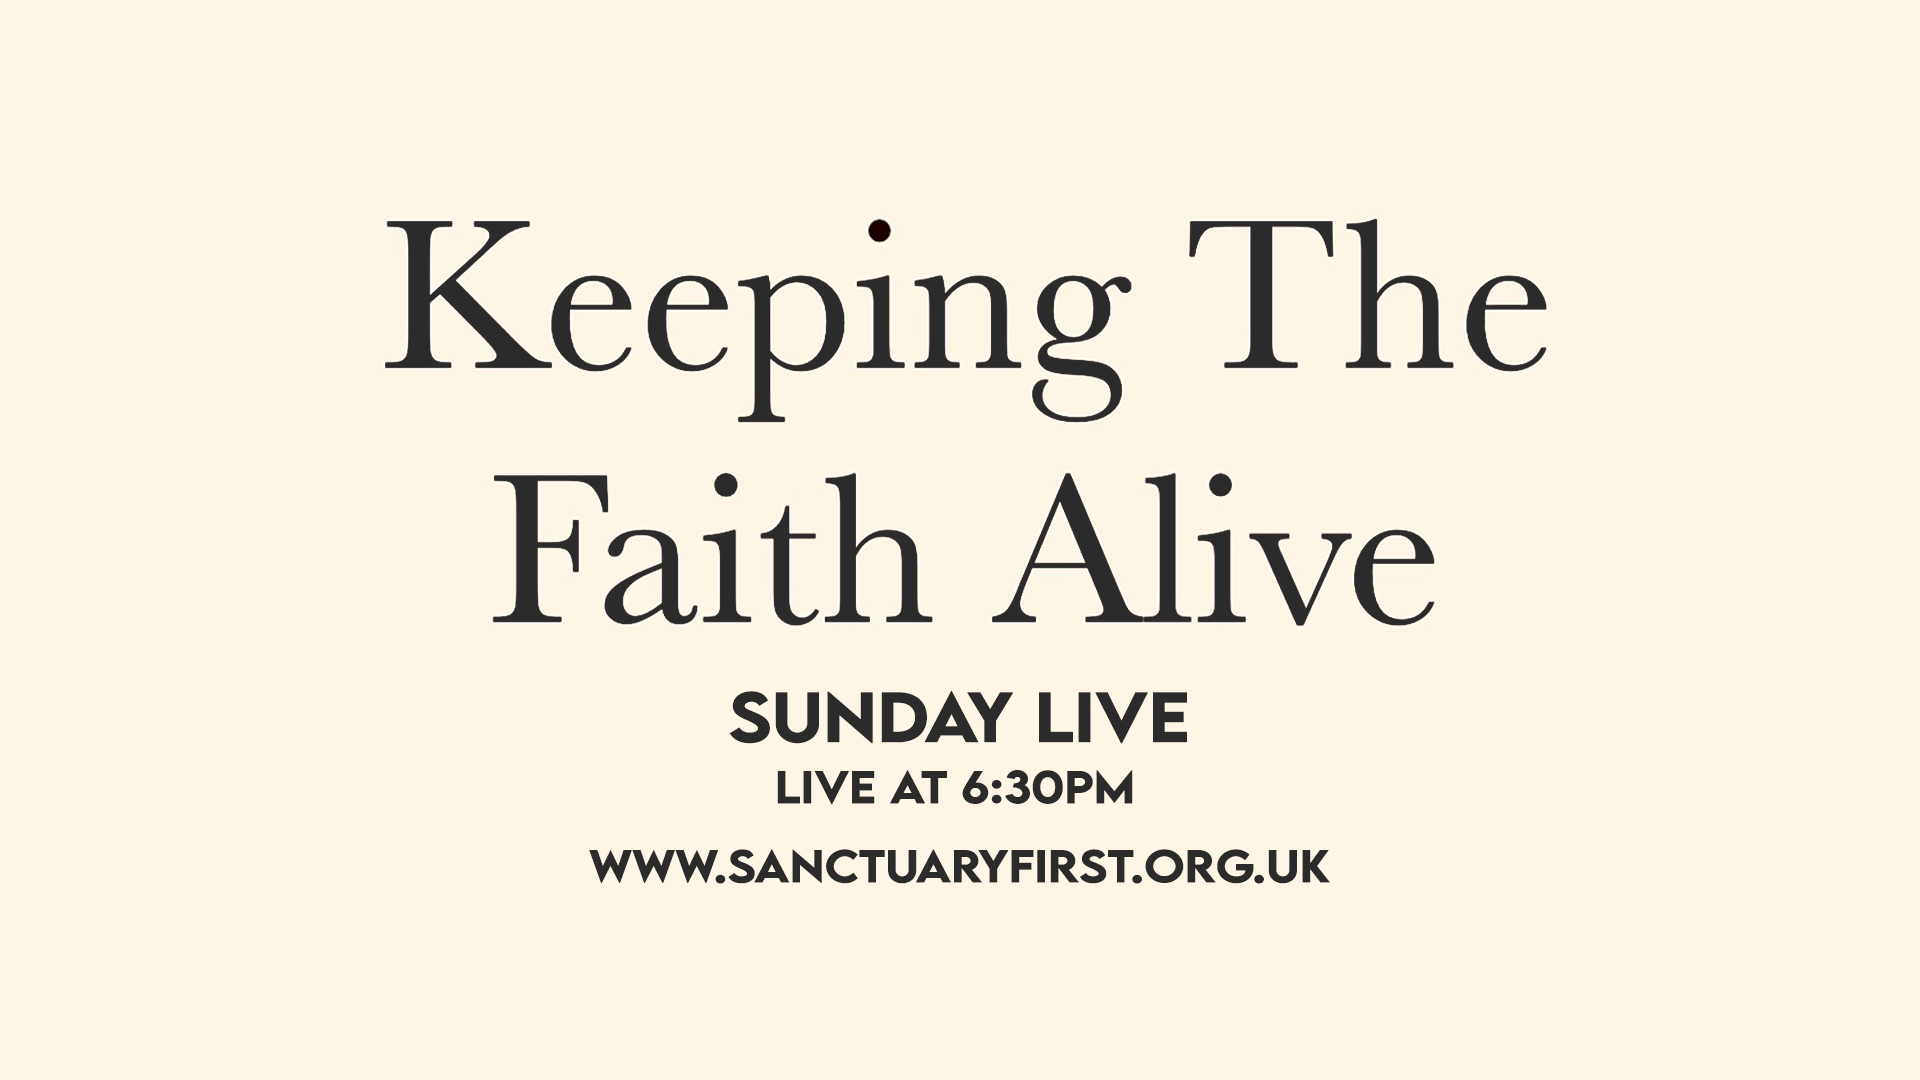 Sunday Live - Keeping the Faith Alive